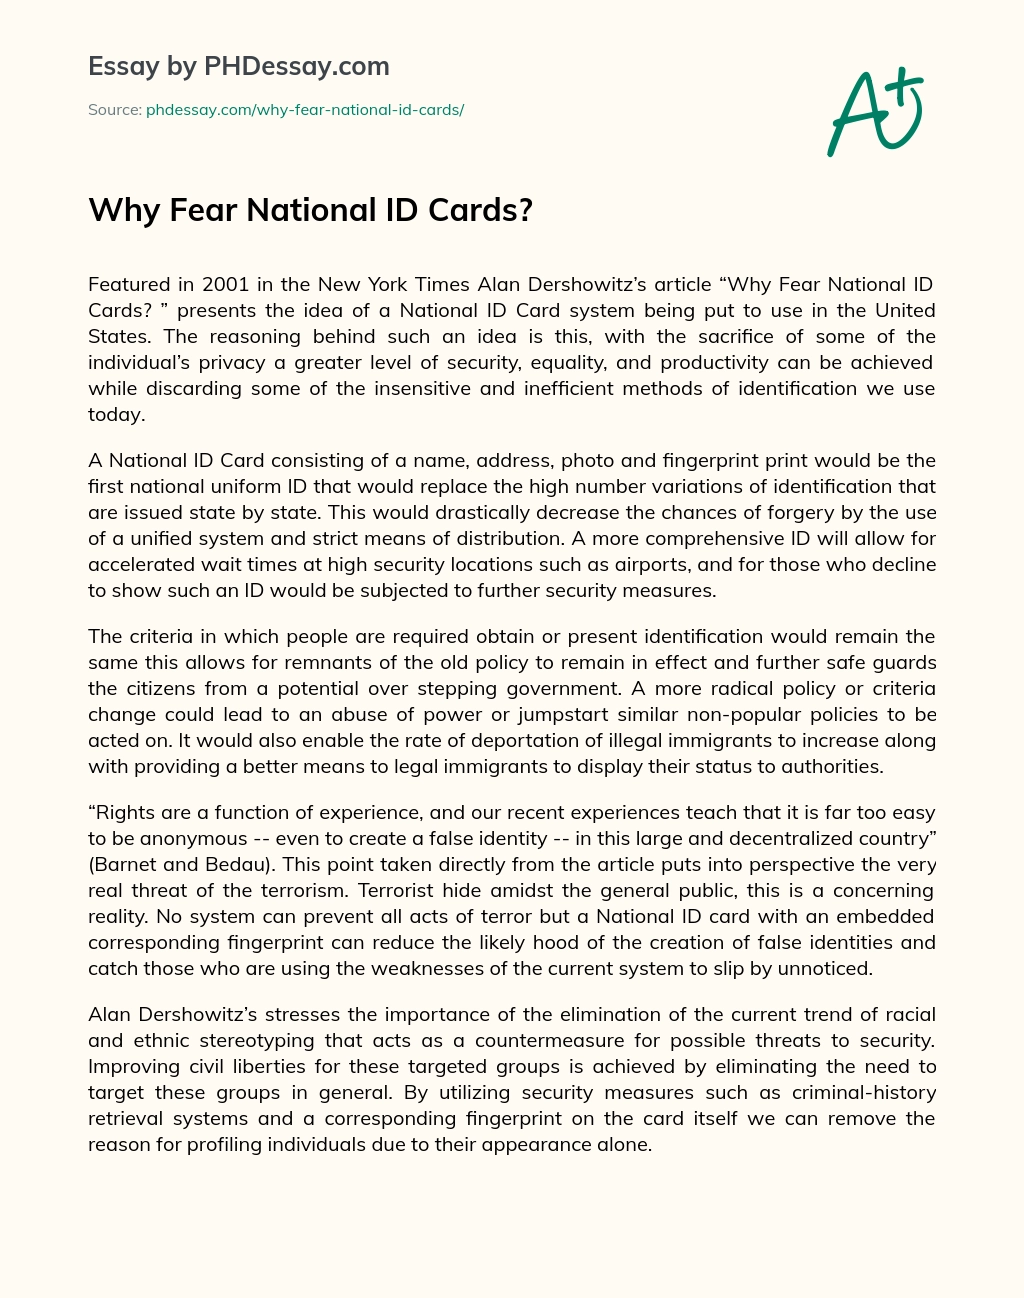 Why Fear National ID Cards? essay